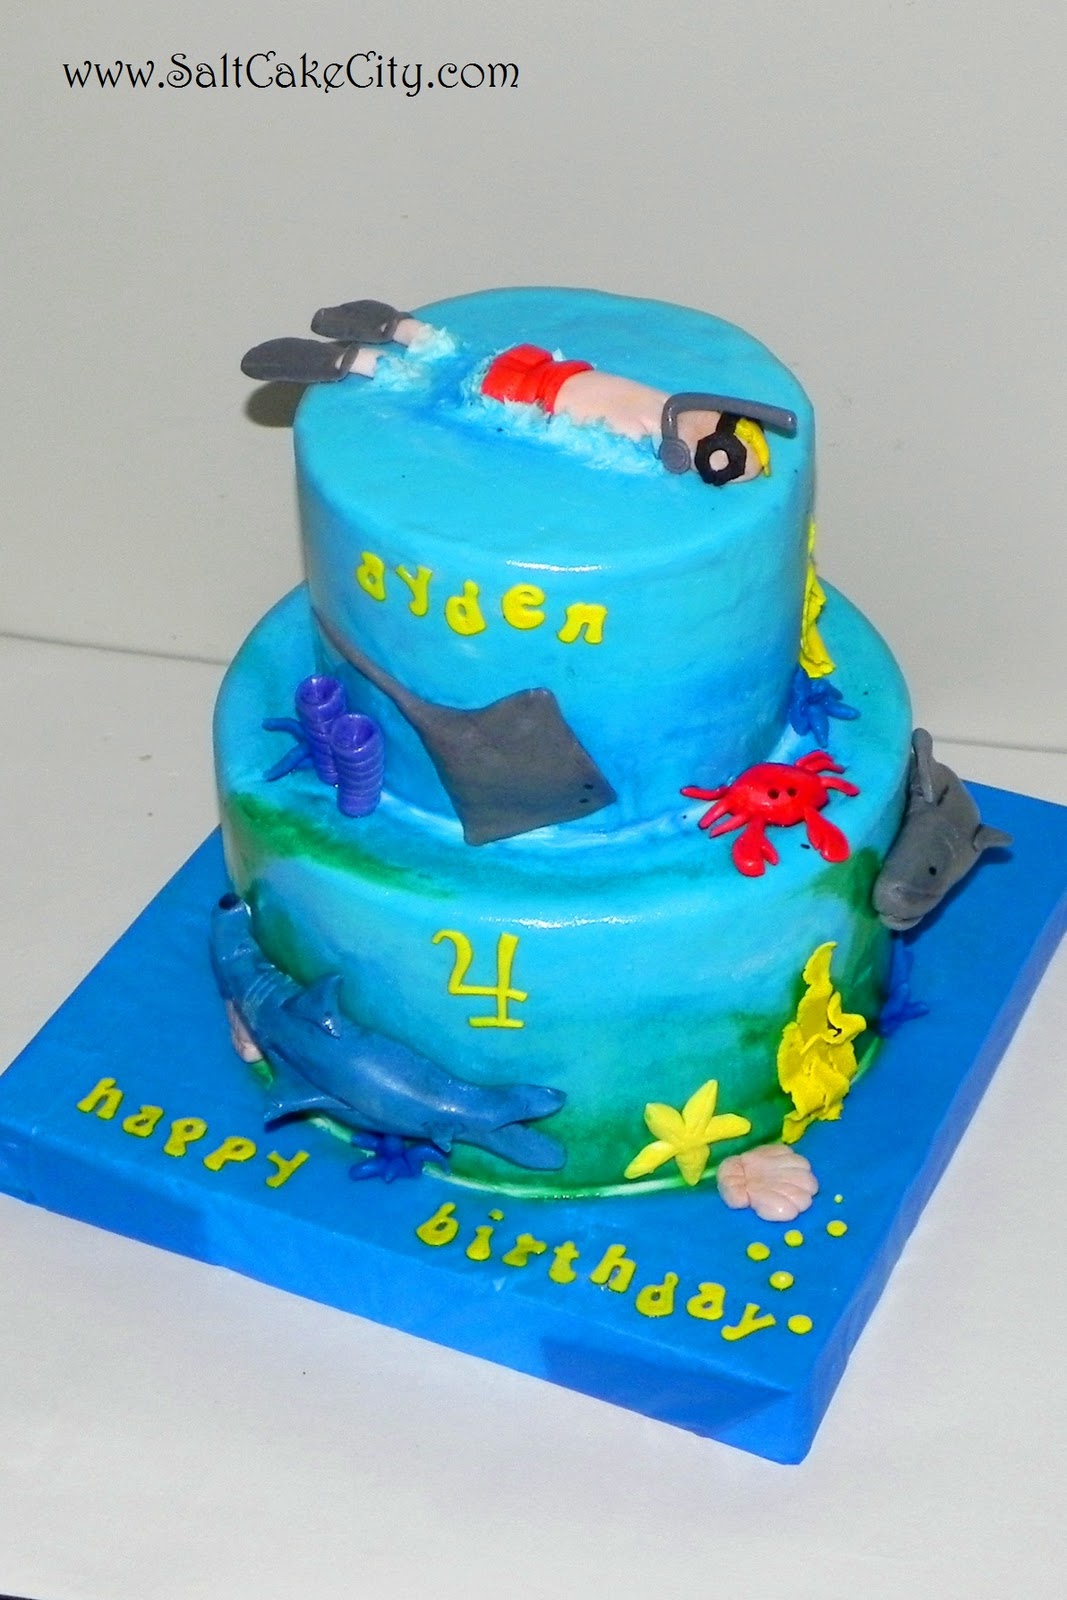 http://3.bp.blogspot.com/-Jvw9linbrBU/TwpDlLzHwVI/AAAAAAAABY8/dW7pmGSh9v8/s1600/362+Sharks+%2526+Stingrays+Cake.jpg